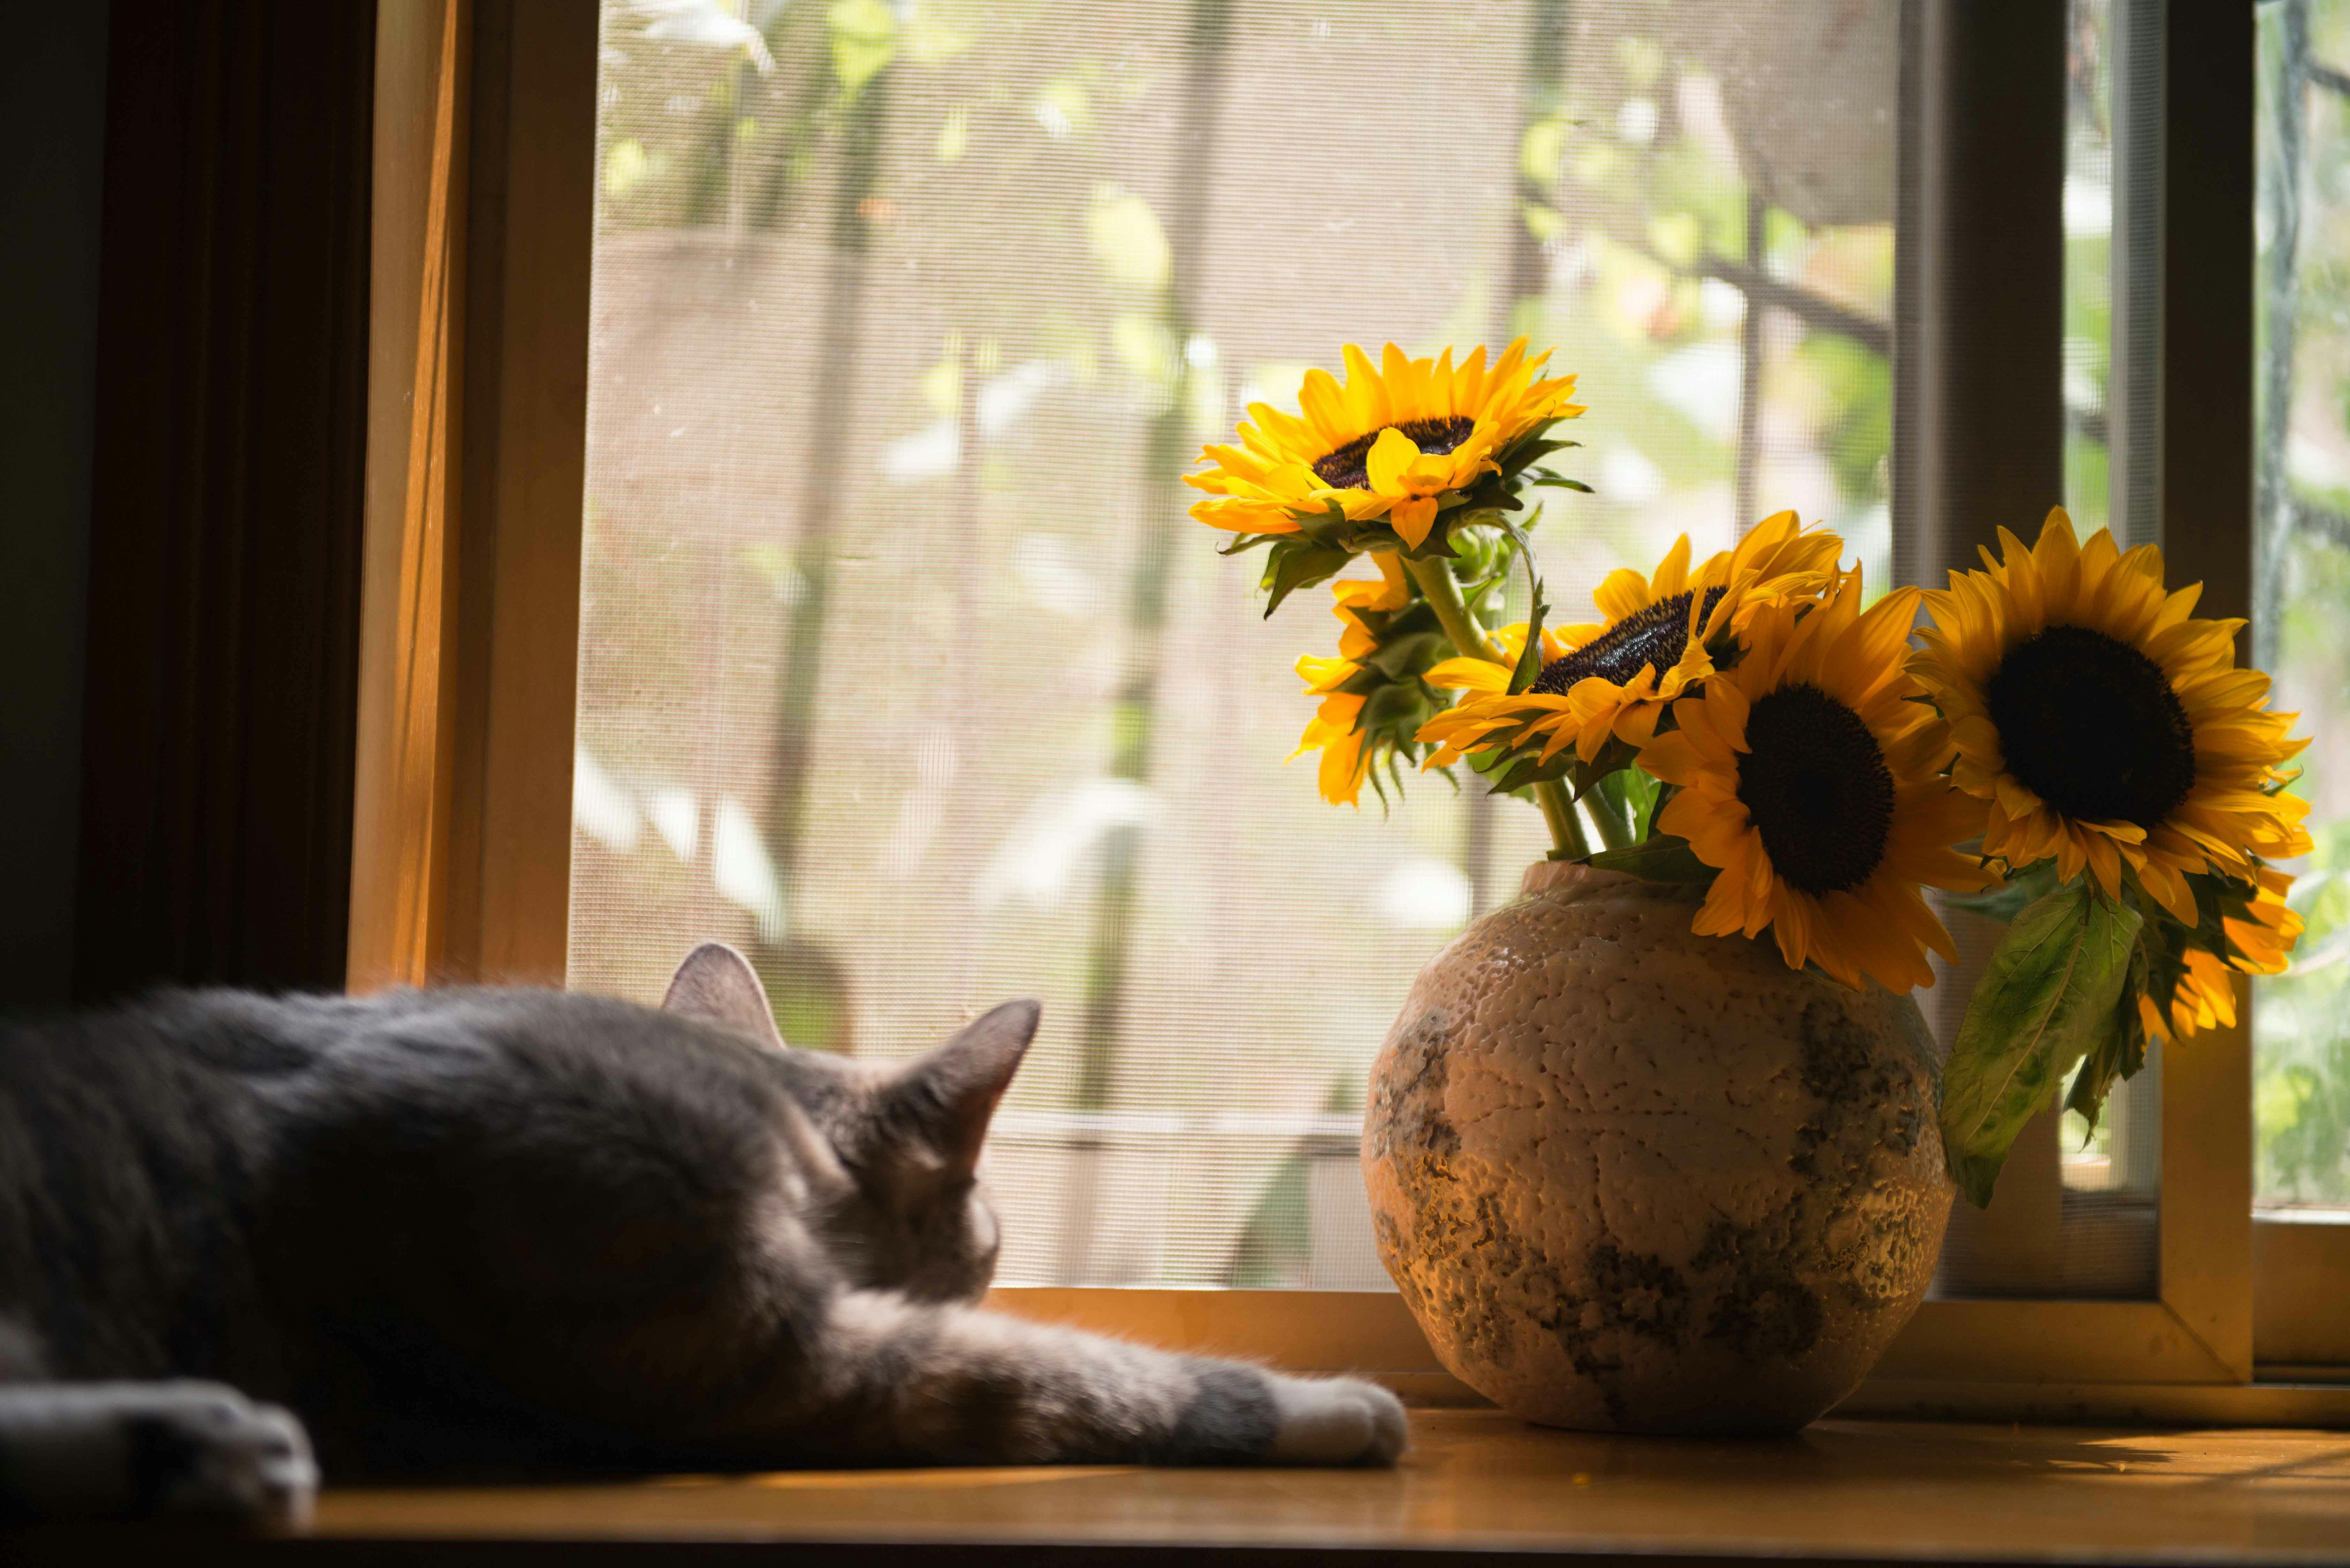 Gray cat lying on windowsill with ceramic vase and sunflowers.